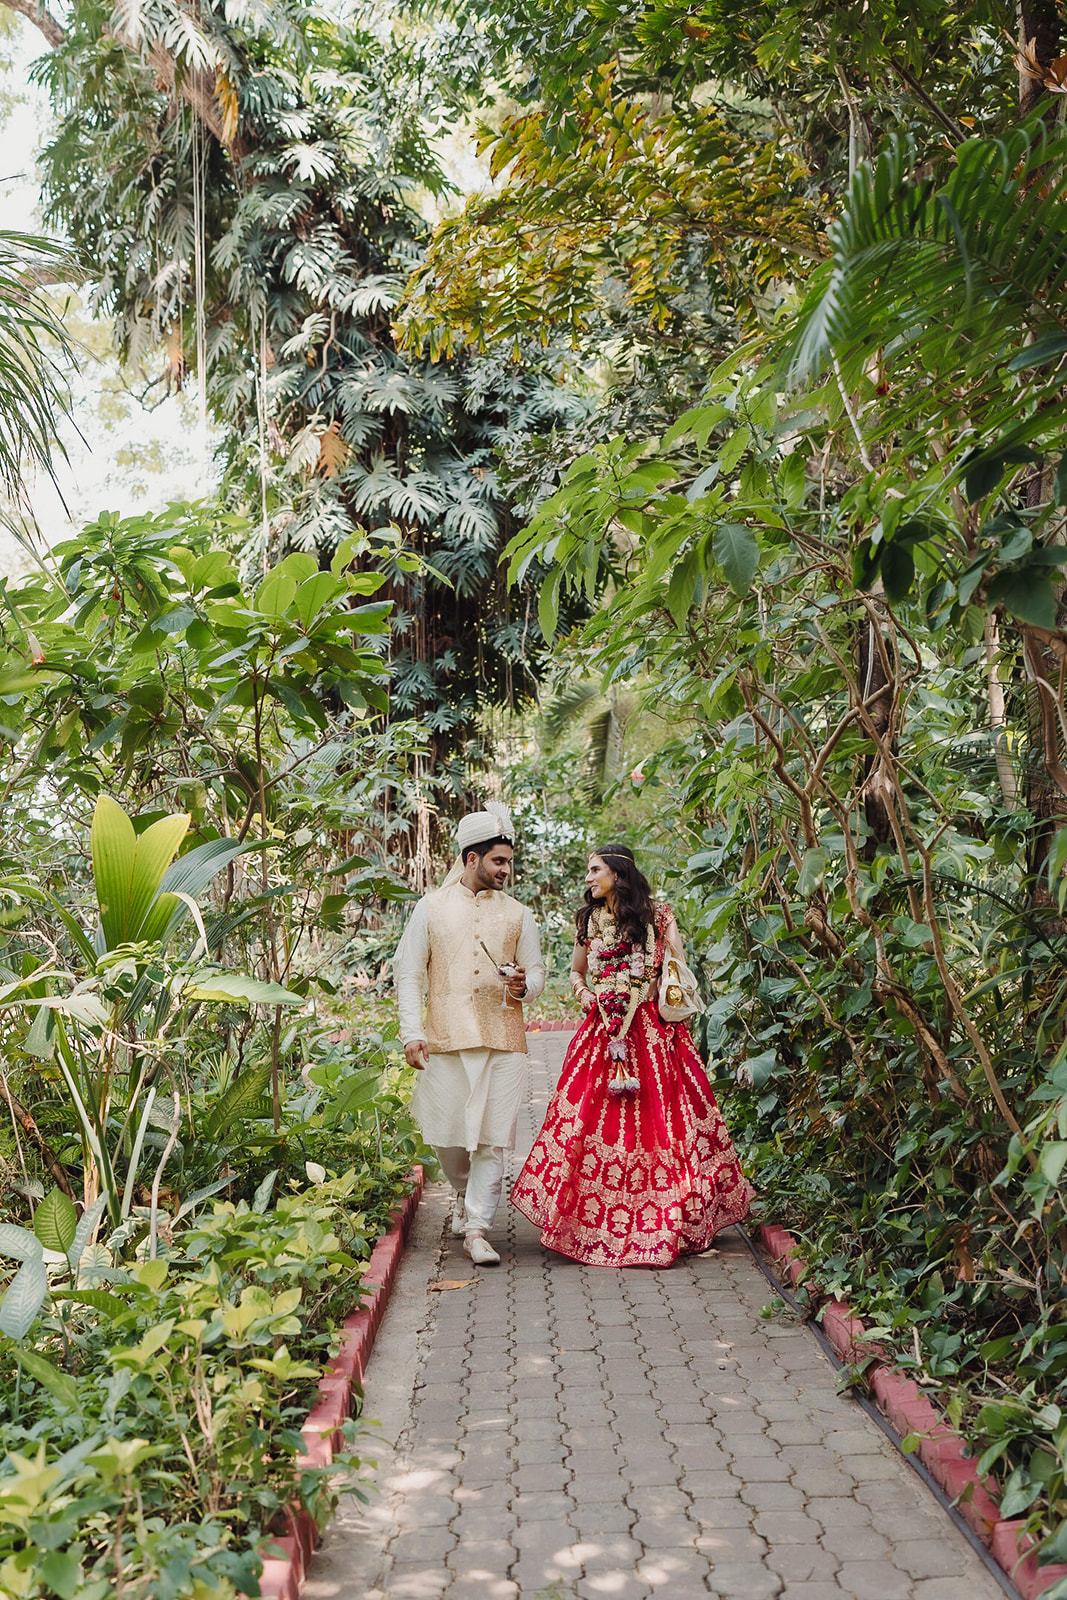 Bride and groom take a joyous walk together